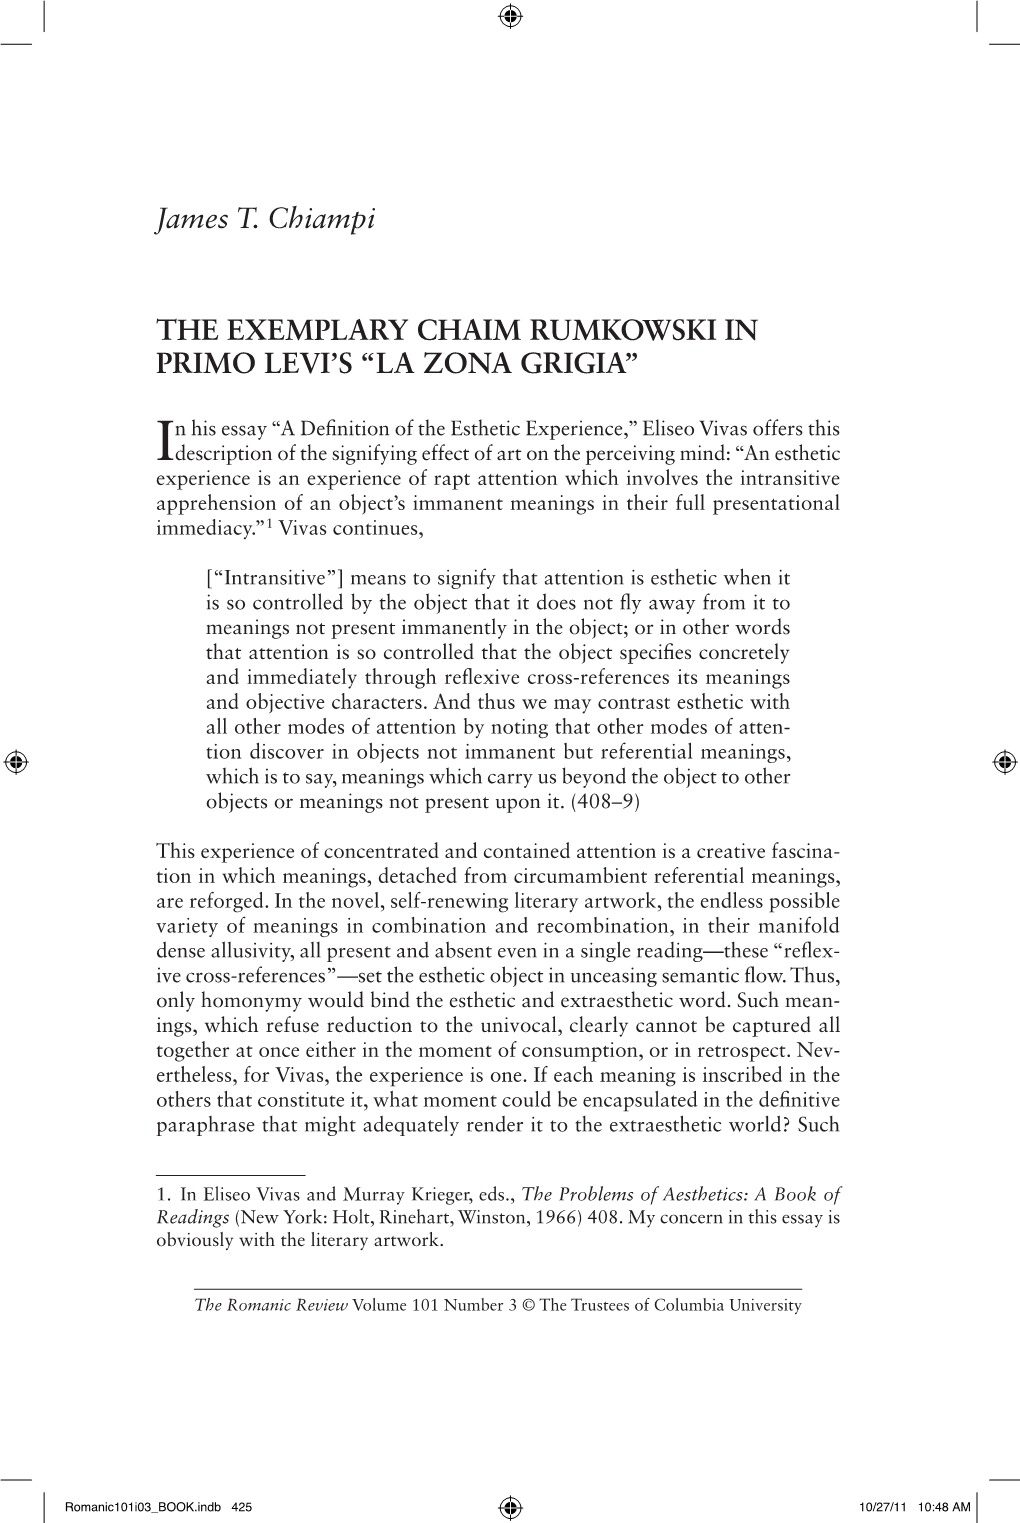 James T. Chiampi the EXEMPLARY CHAIM RUMKOWSKI in PRIMO LEVI's